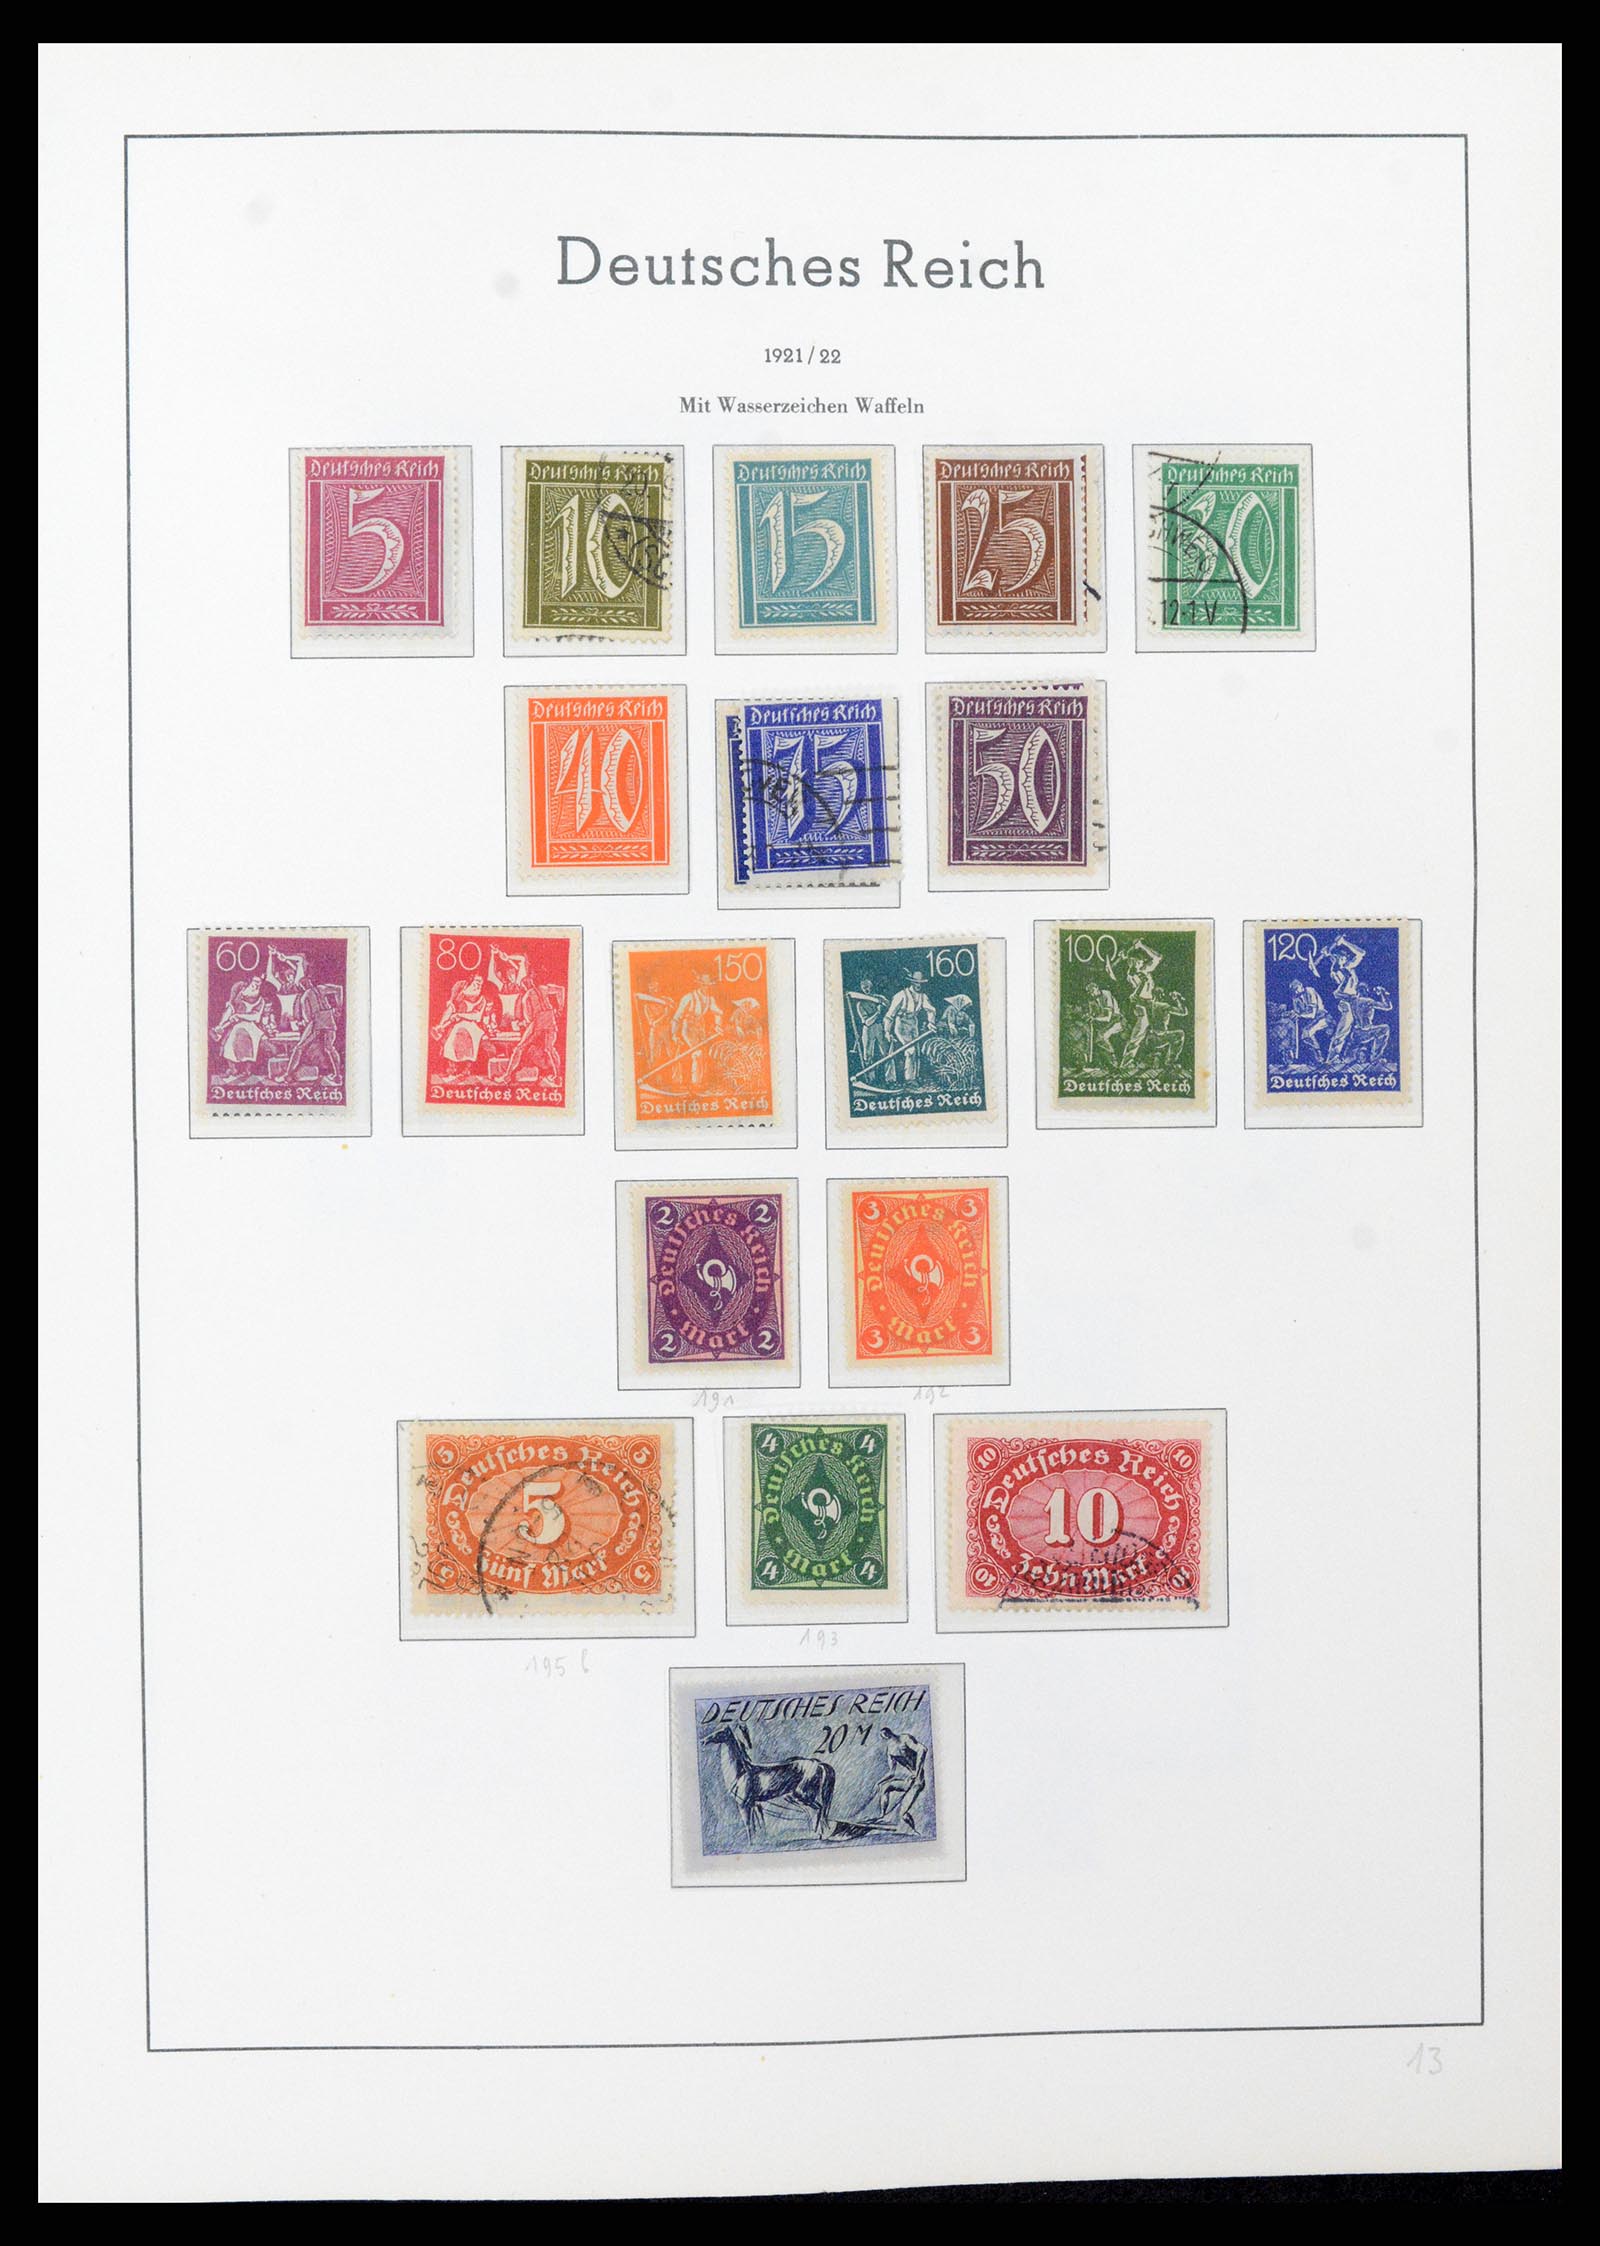 37589 016 - Stamp collection 37589 German Reich 1872-1945.